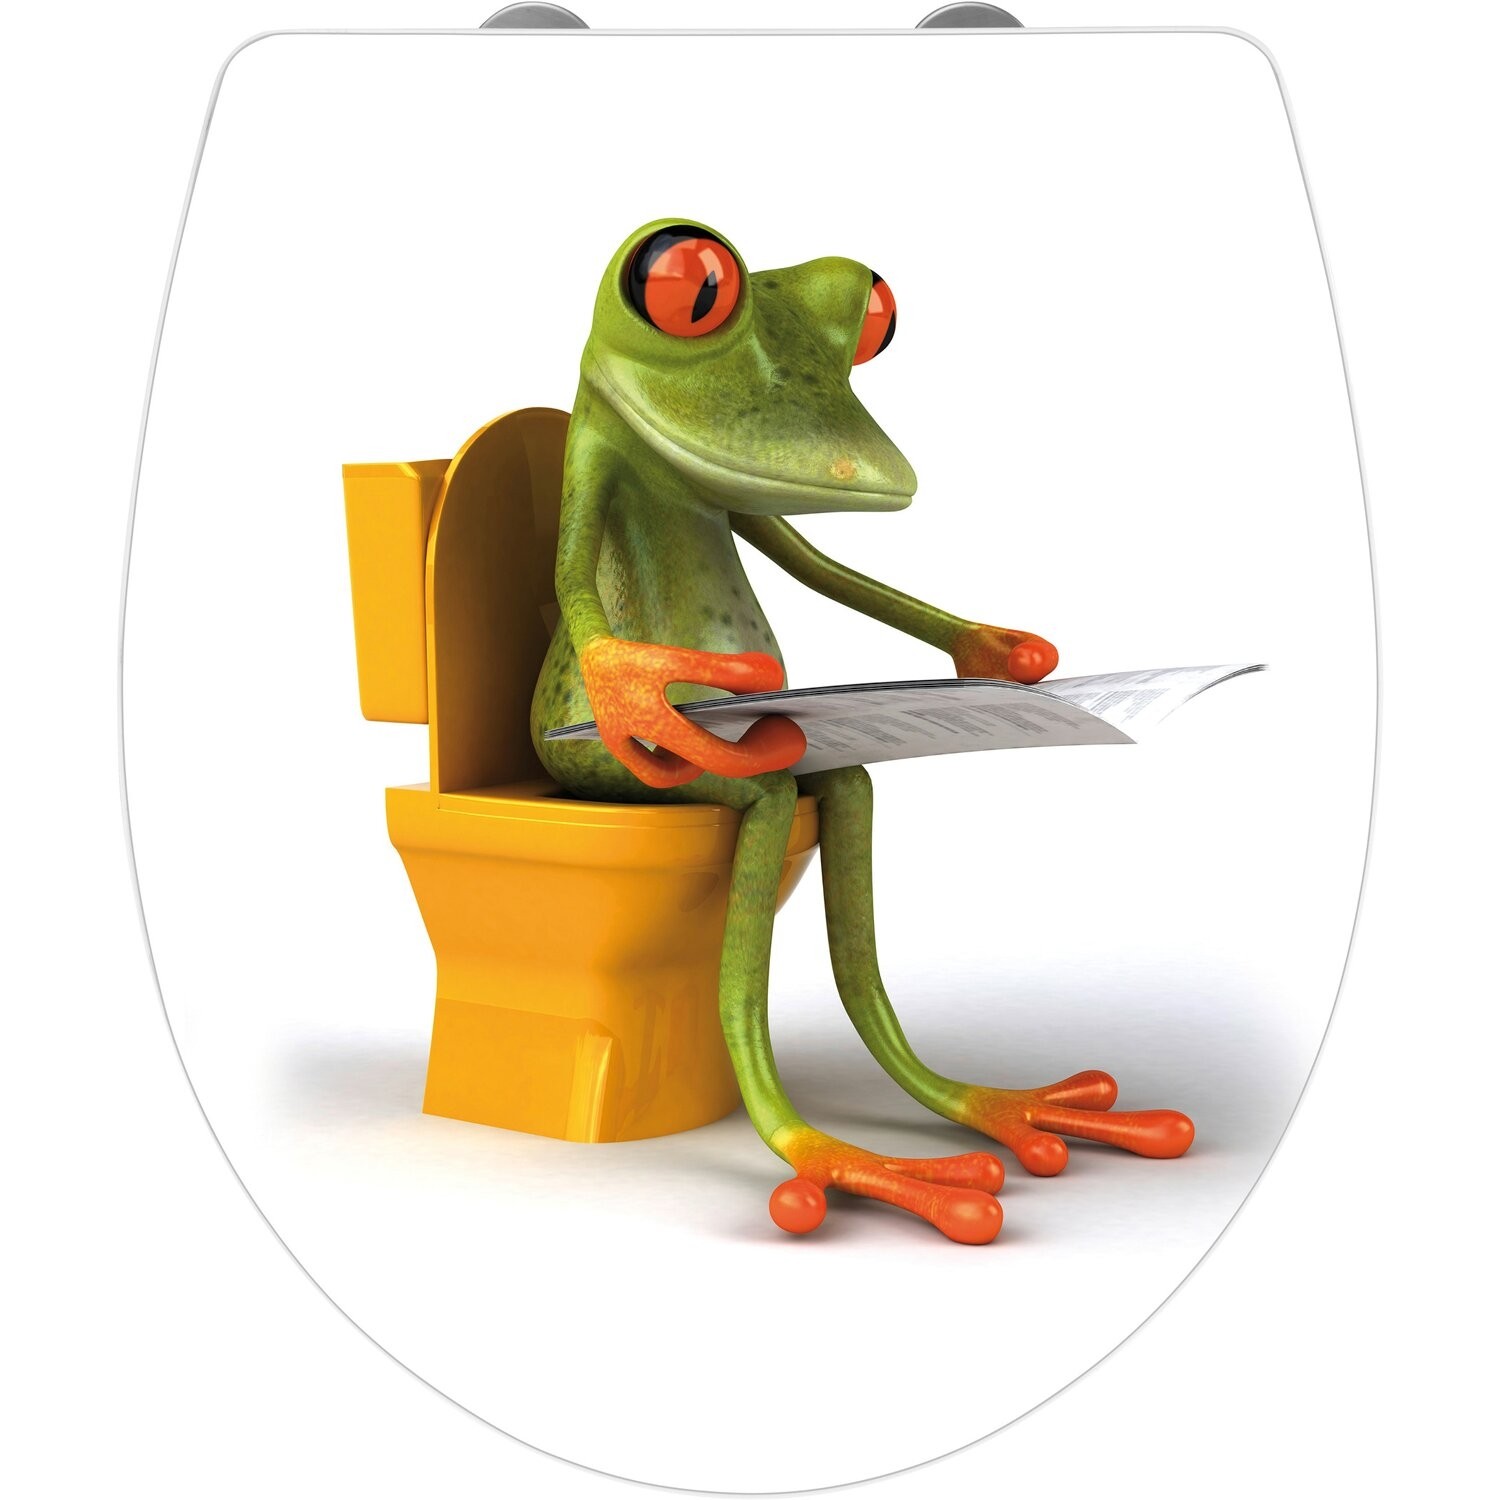 Wenko frog reading novelty toilet seat